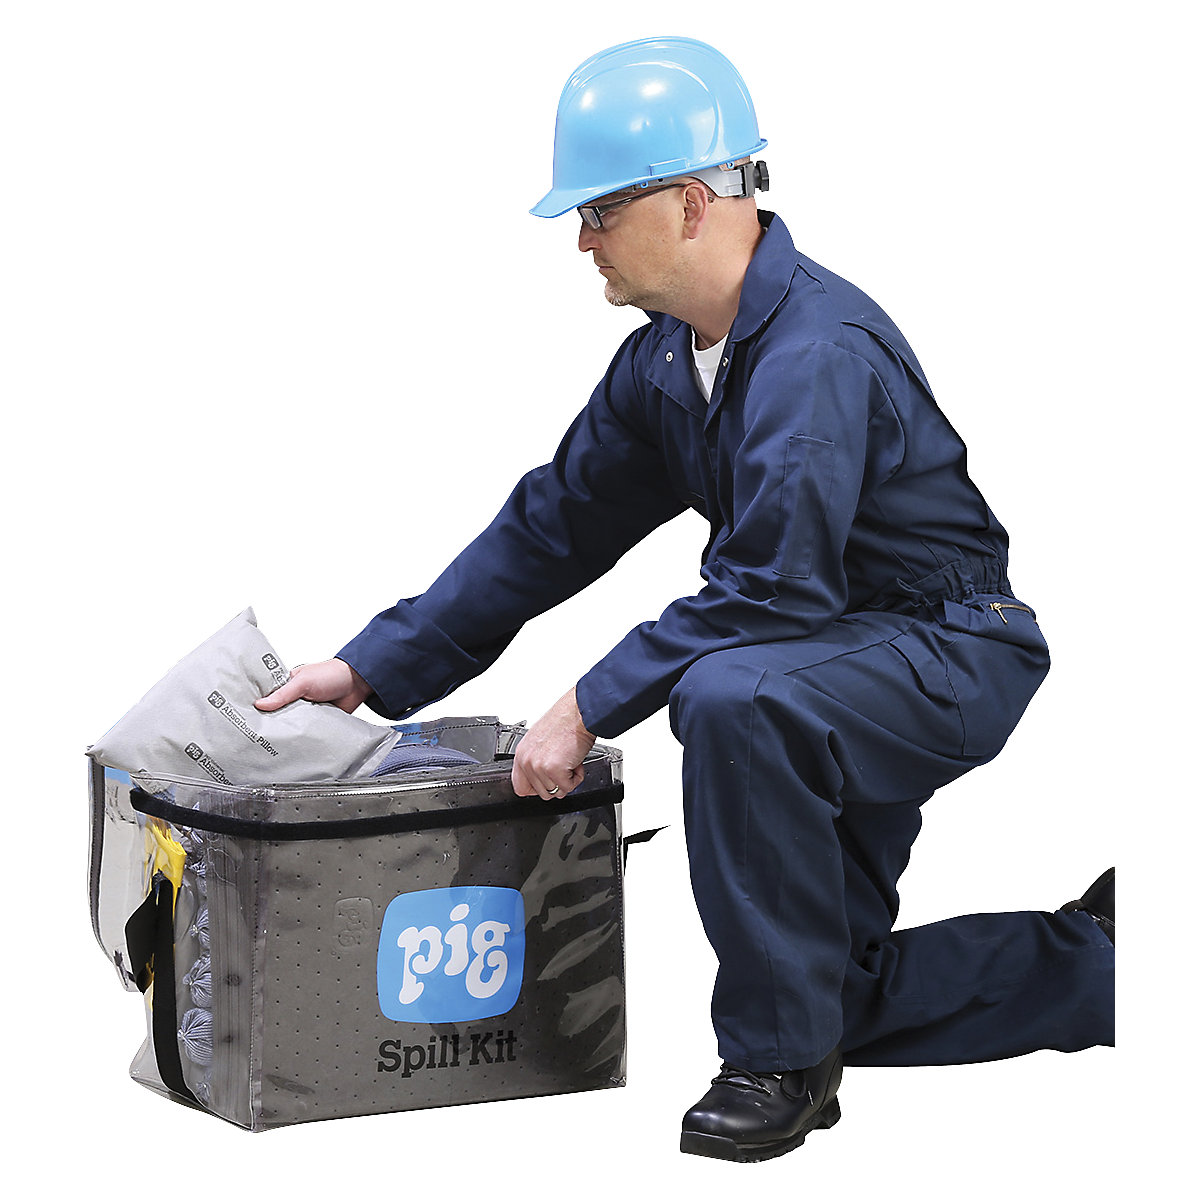 Kit de emergencia en bolsa transparente – PIG (Imagen del producto 3)-2